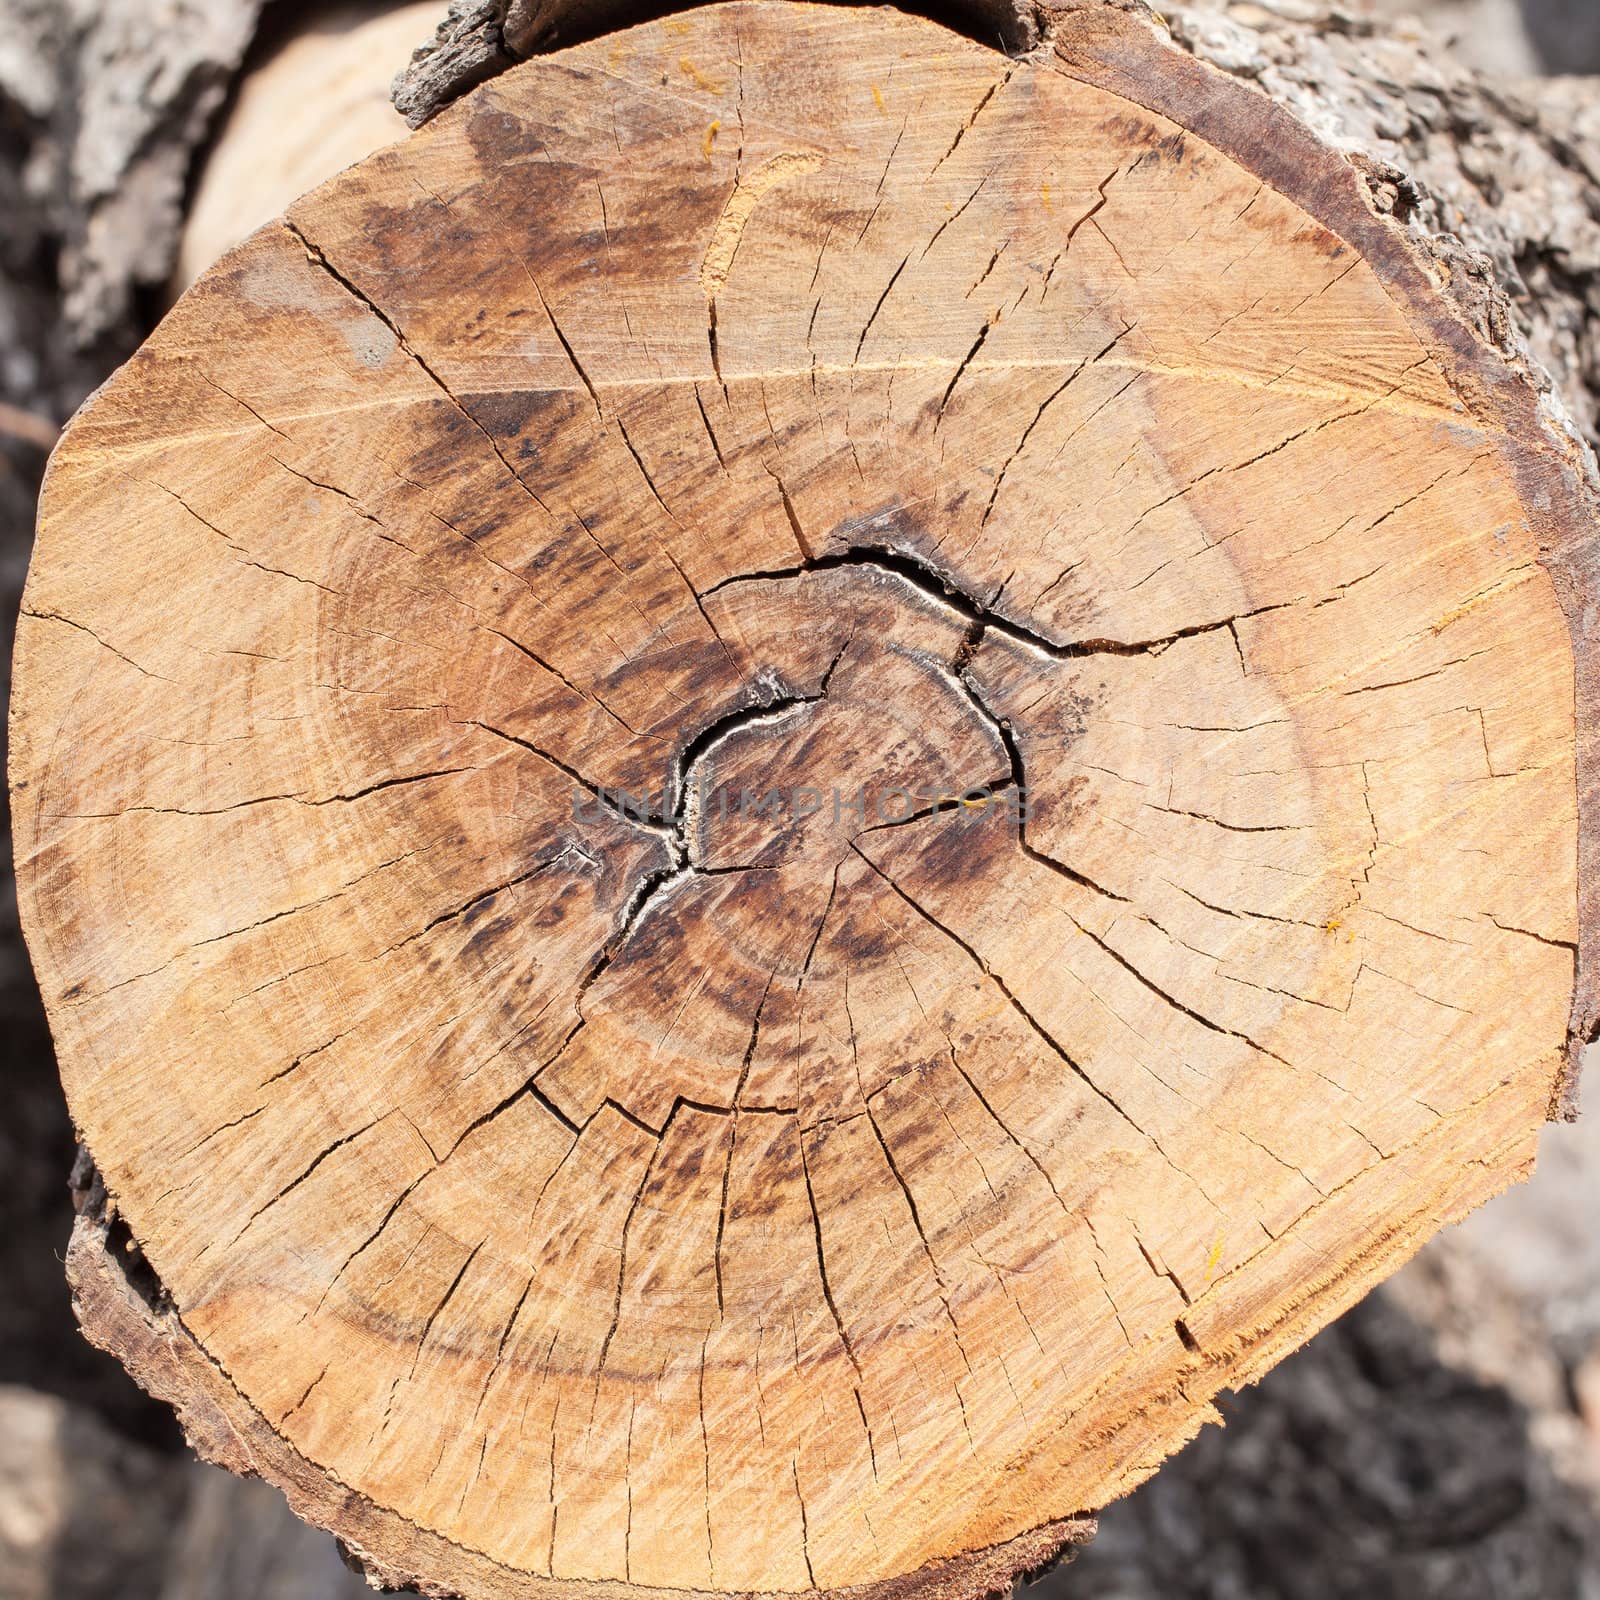 wood circle, cross section of tree stump